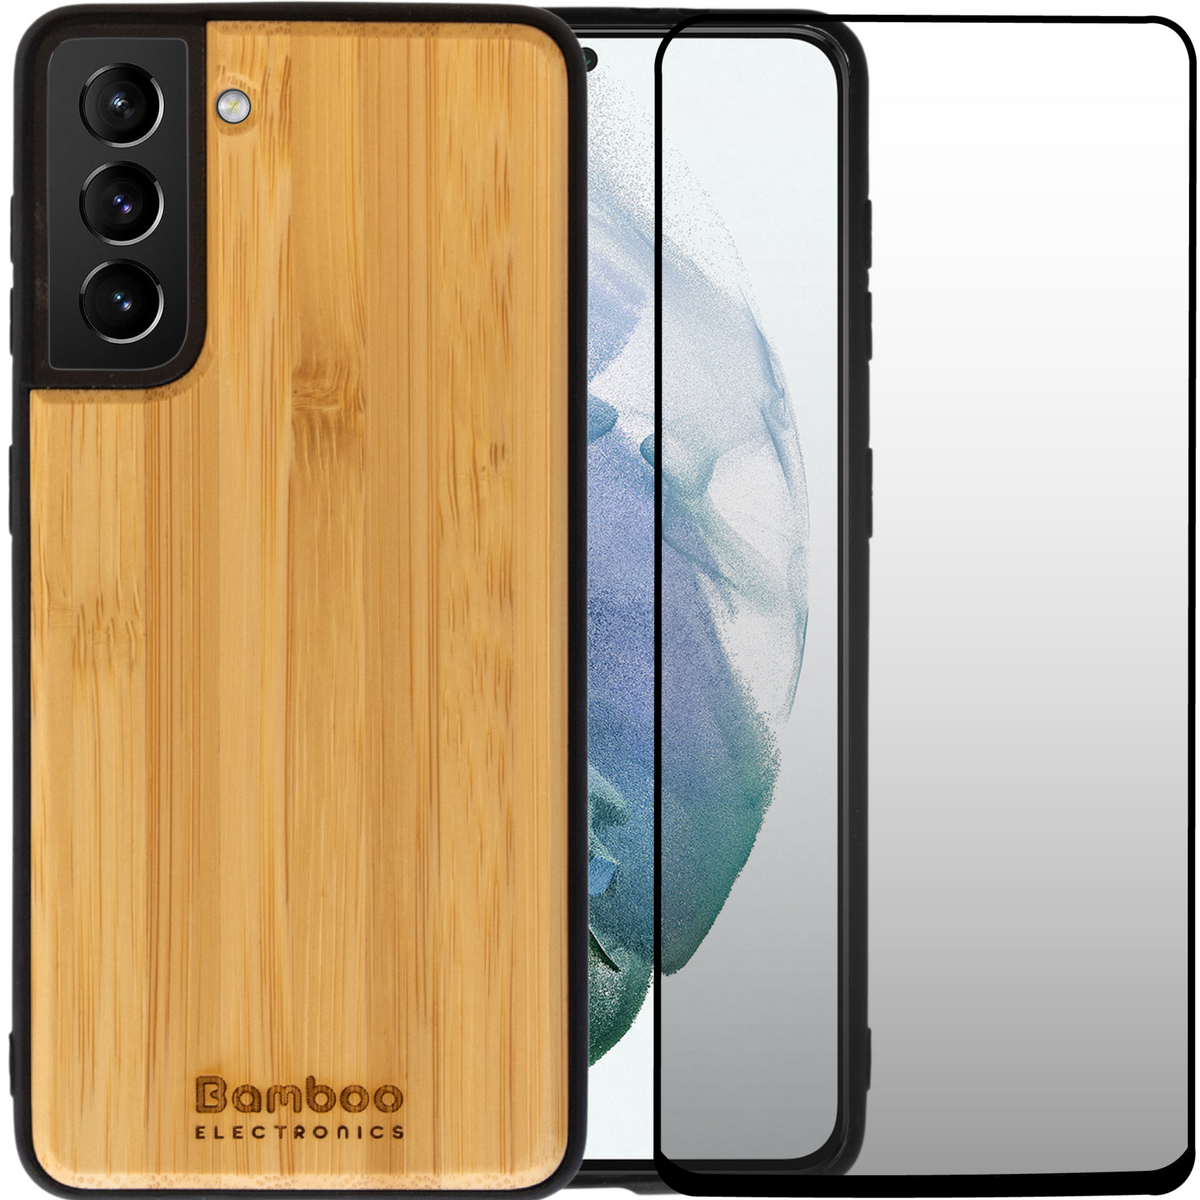 Samsung GS21 Wooden Case + Screen Protector